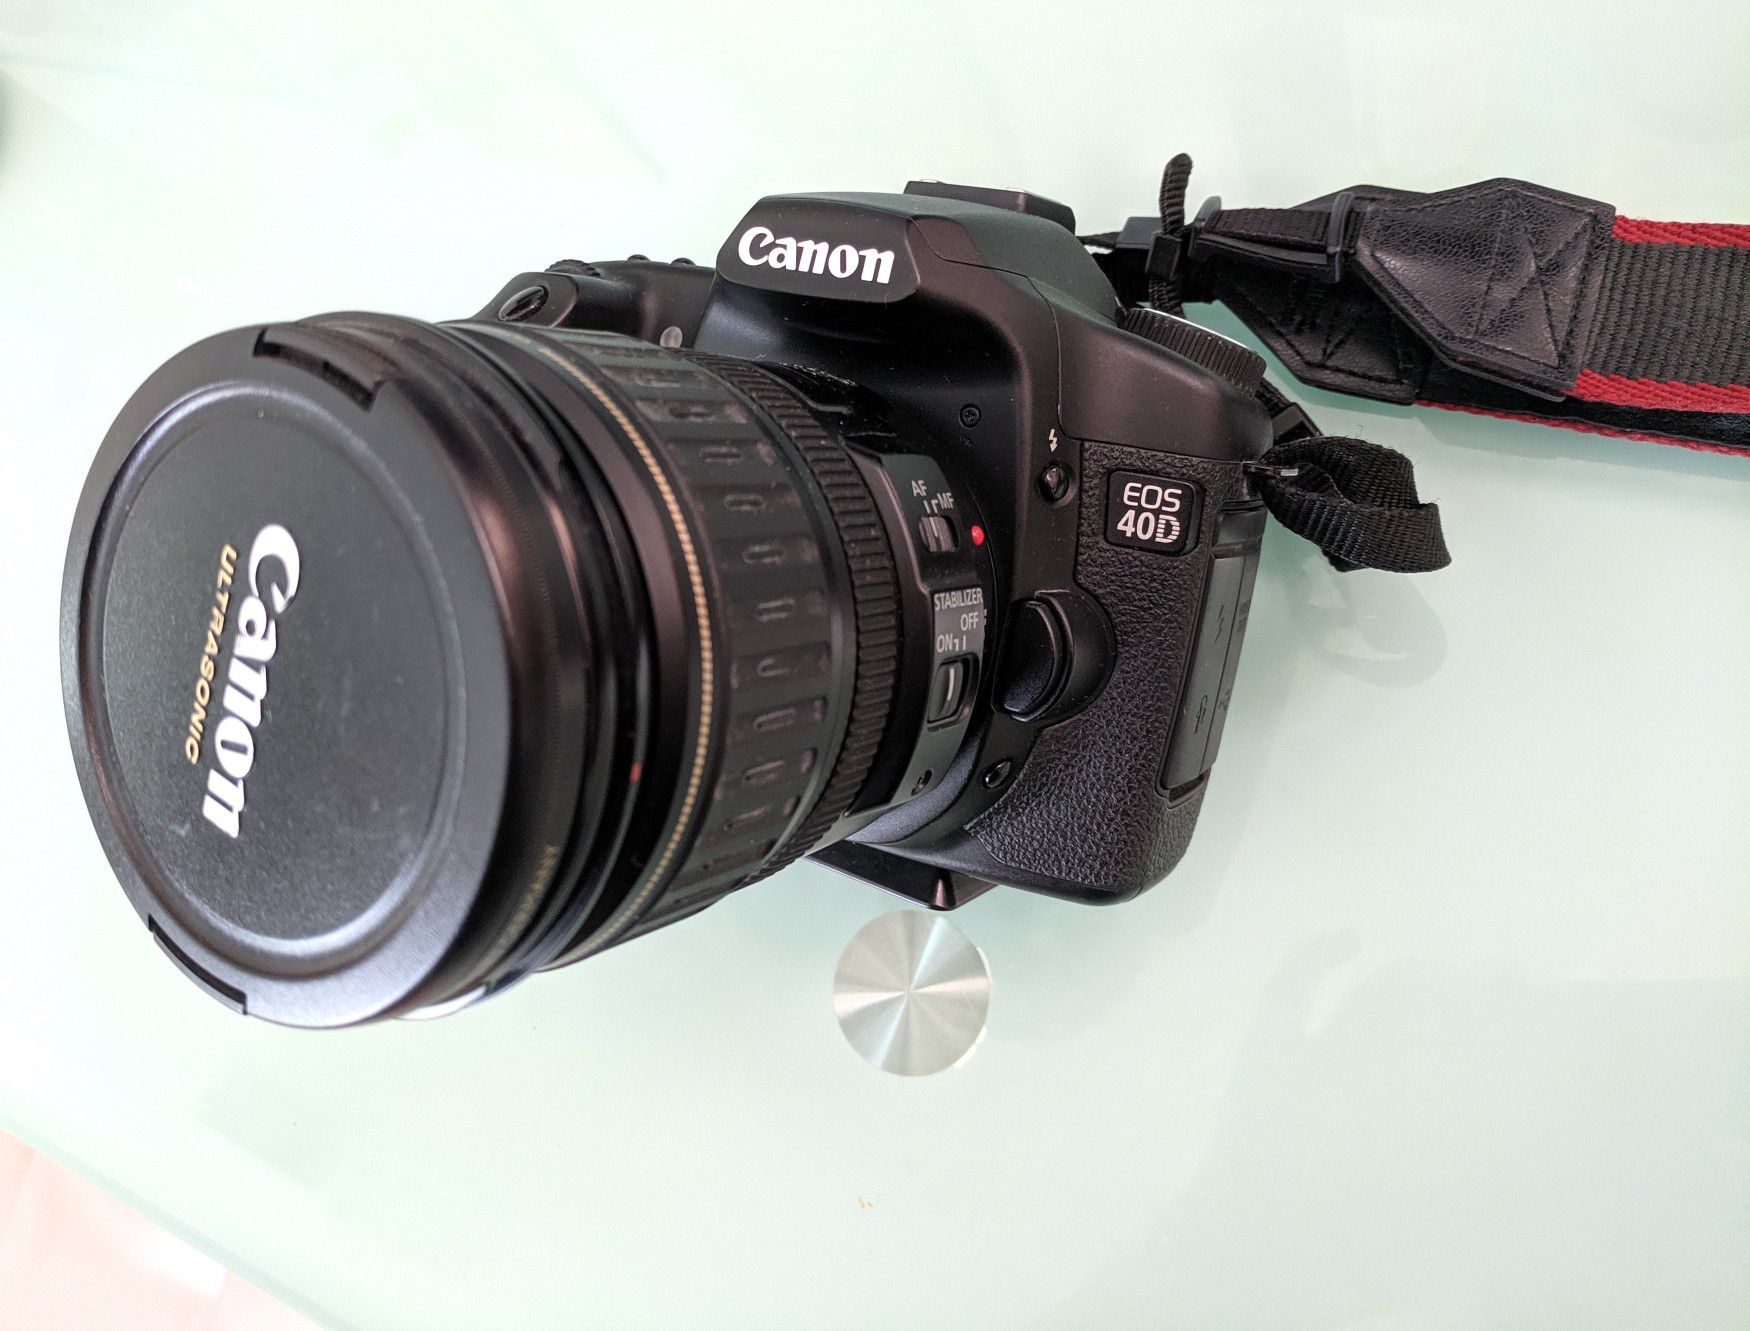 Canon EOS 40D and Canon lense EF 28-135 mm